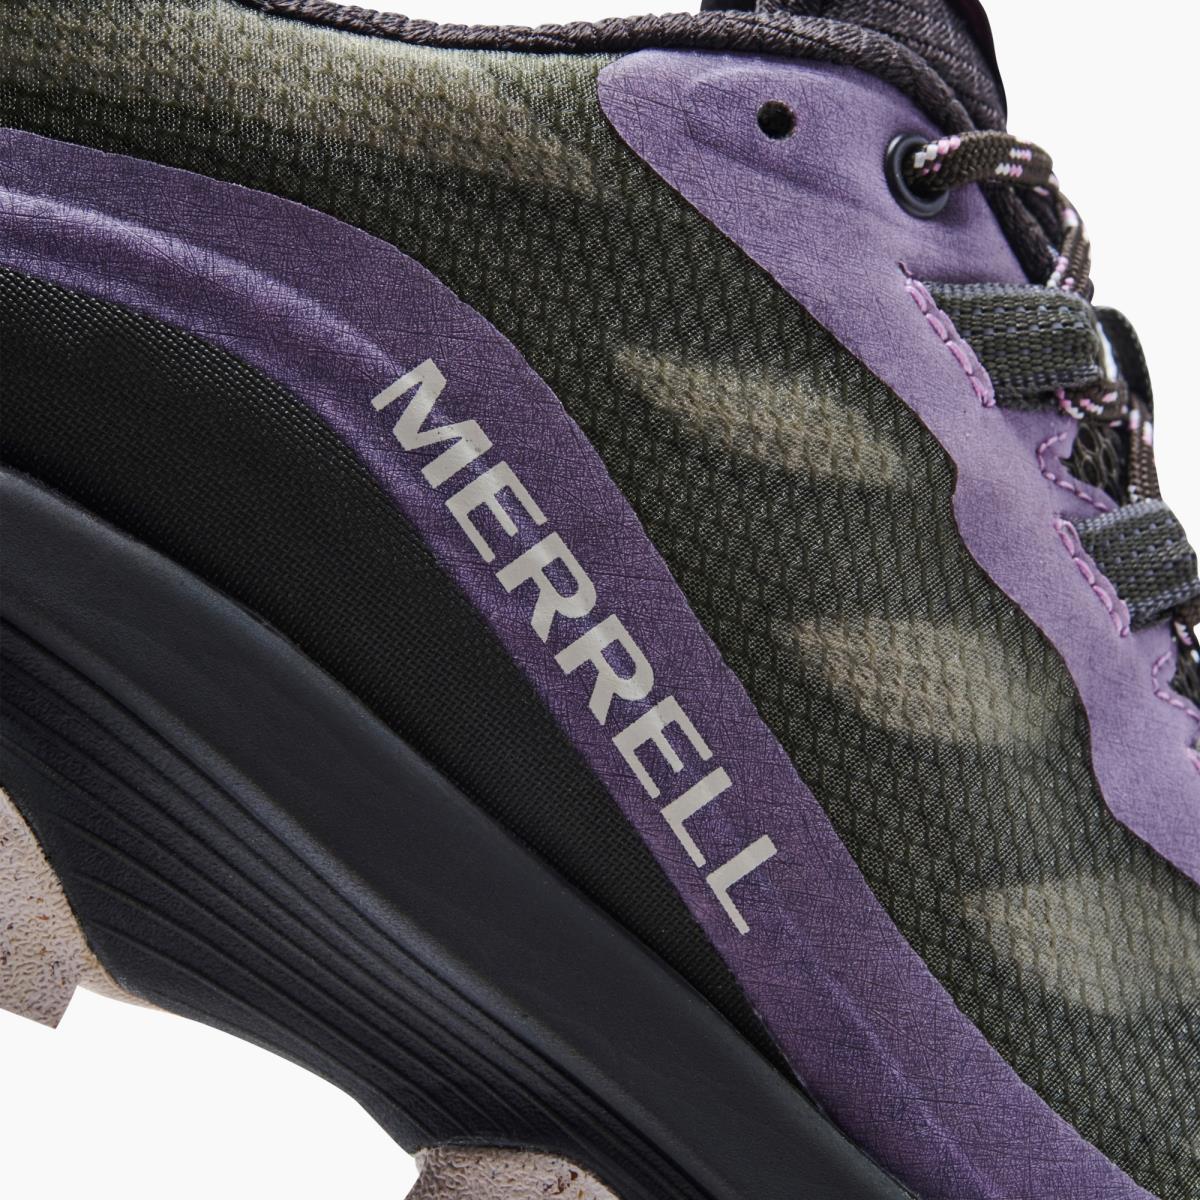 Merrell shoes  22